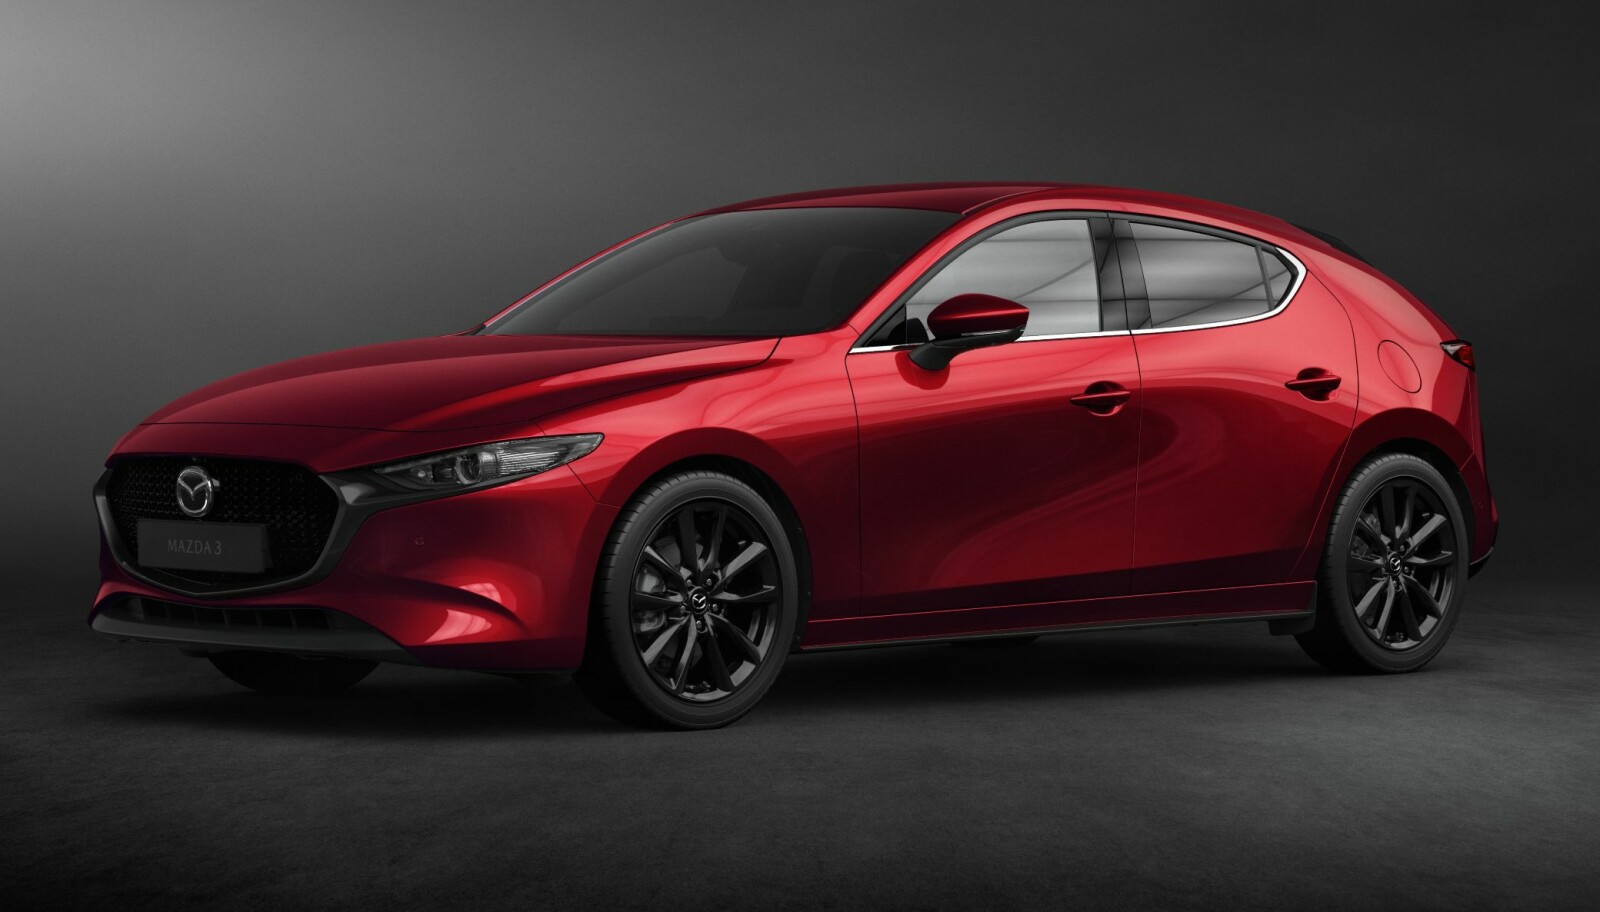 NY: Nye Mazda3 har verdenspremiere i Los Angeles.